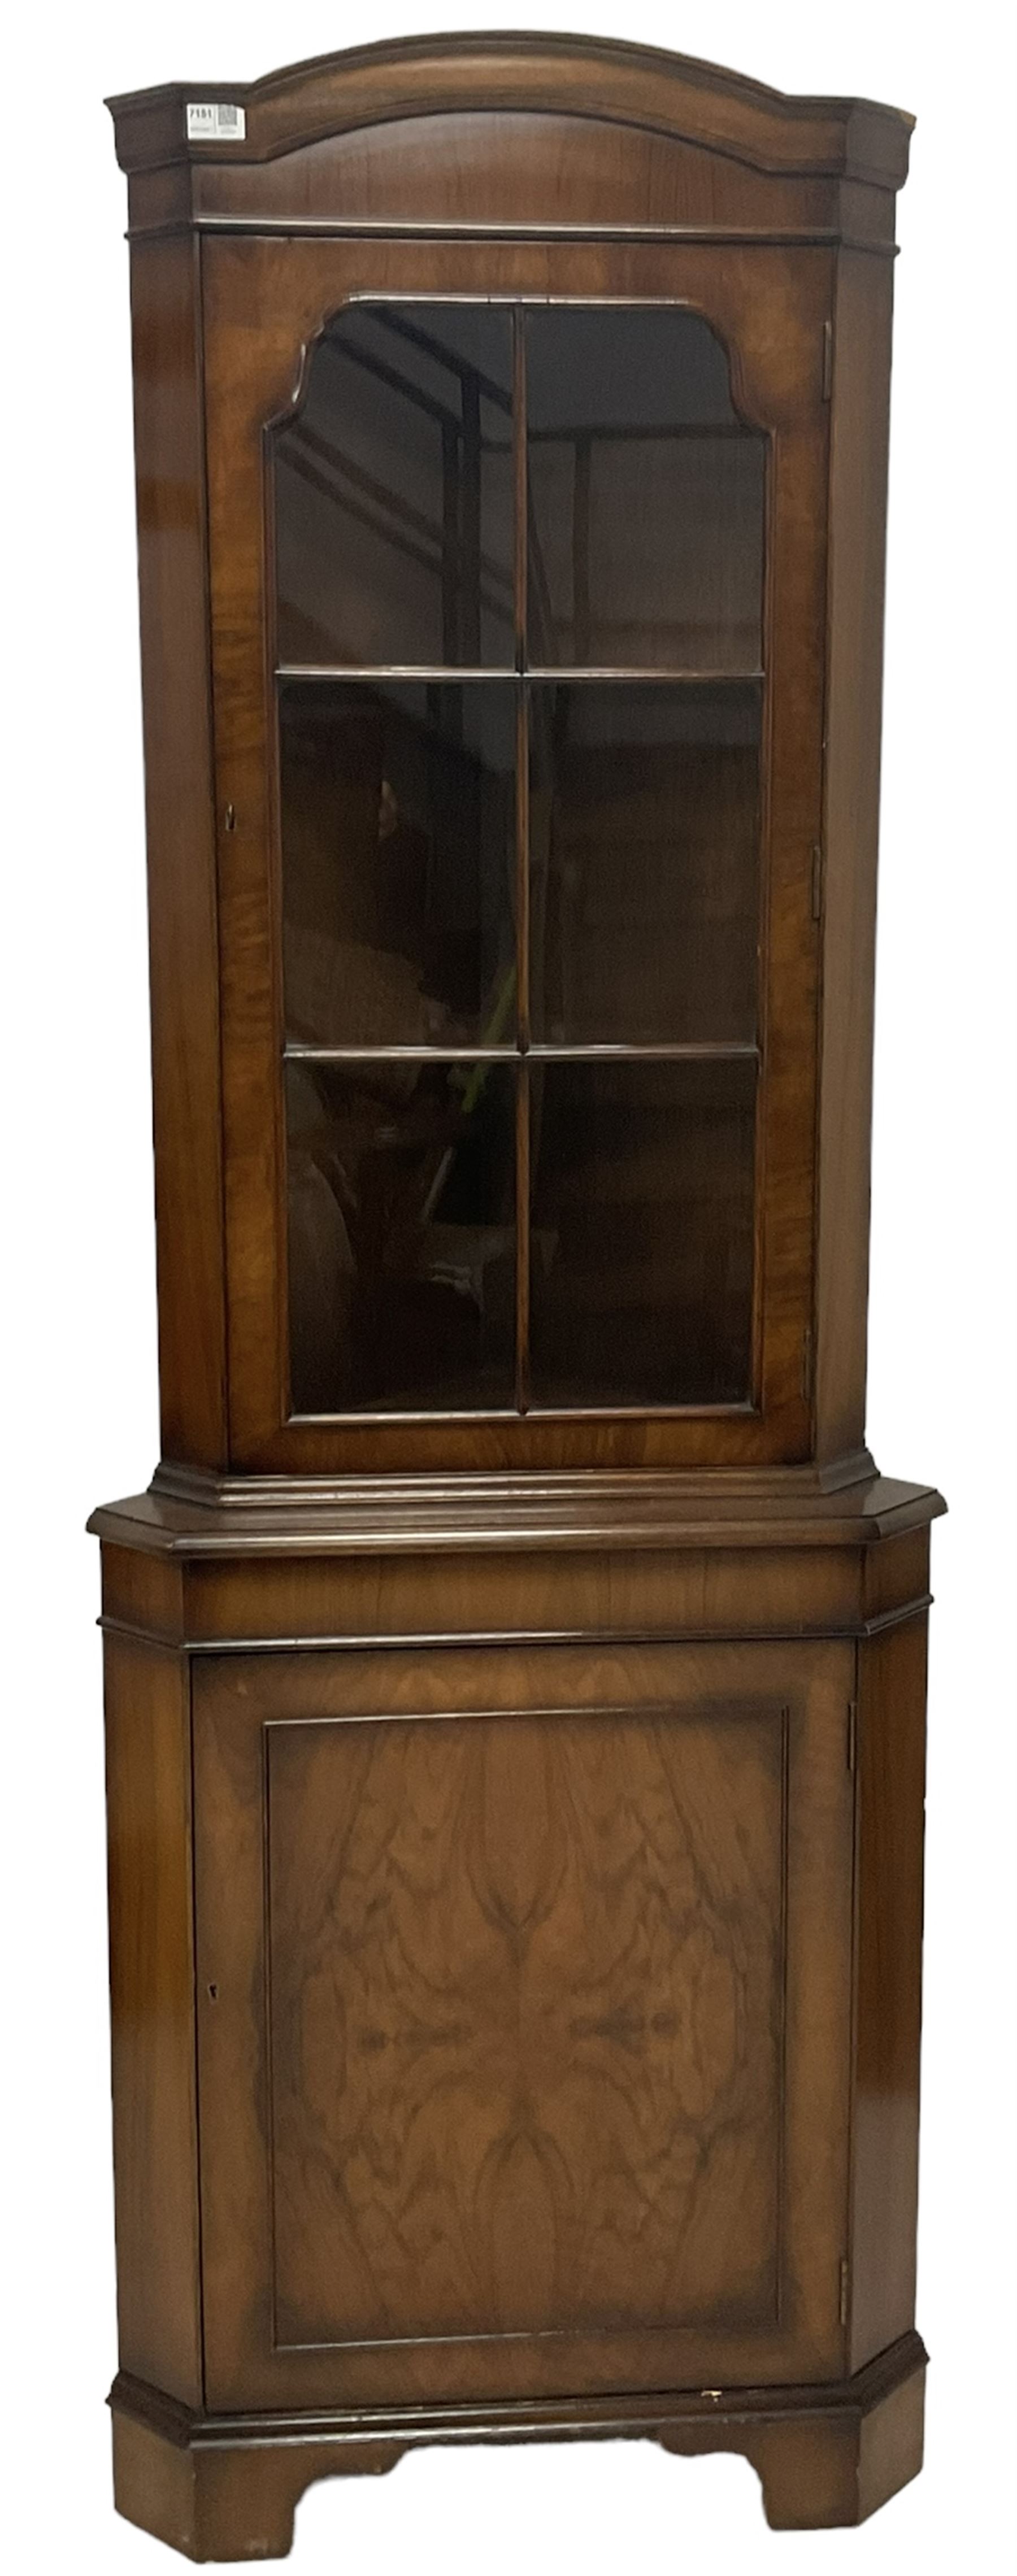 Mid 20th century walnut corner cabinet